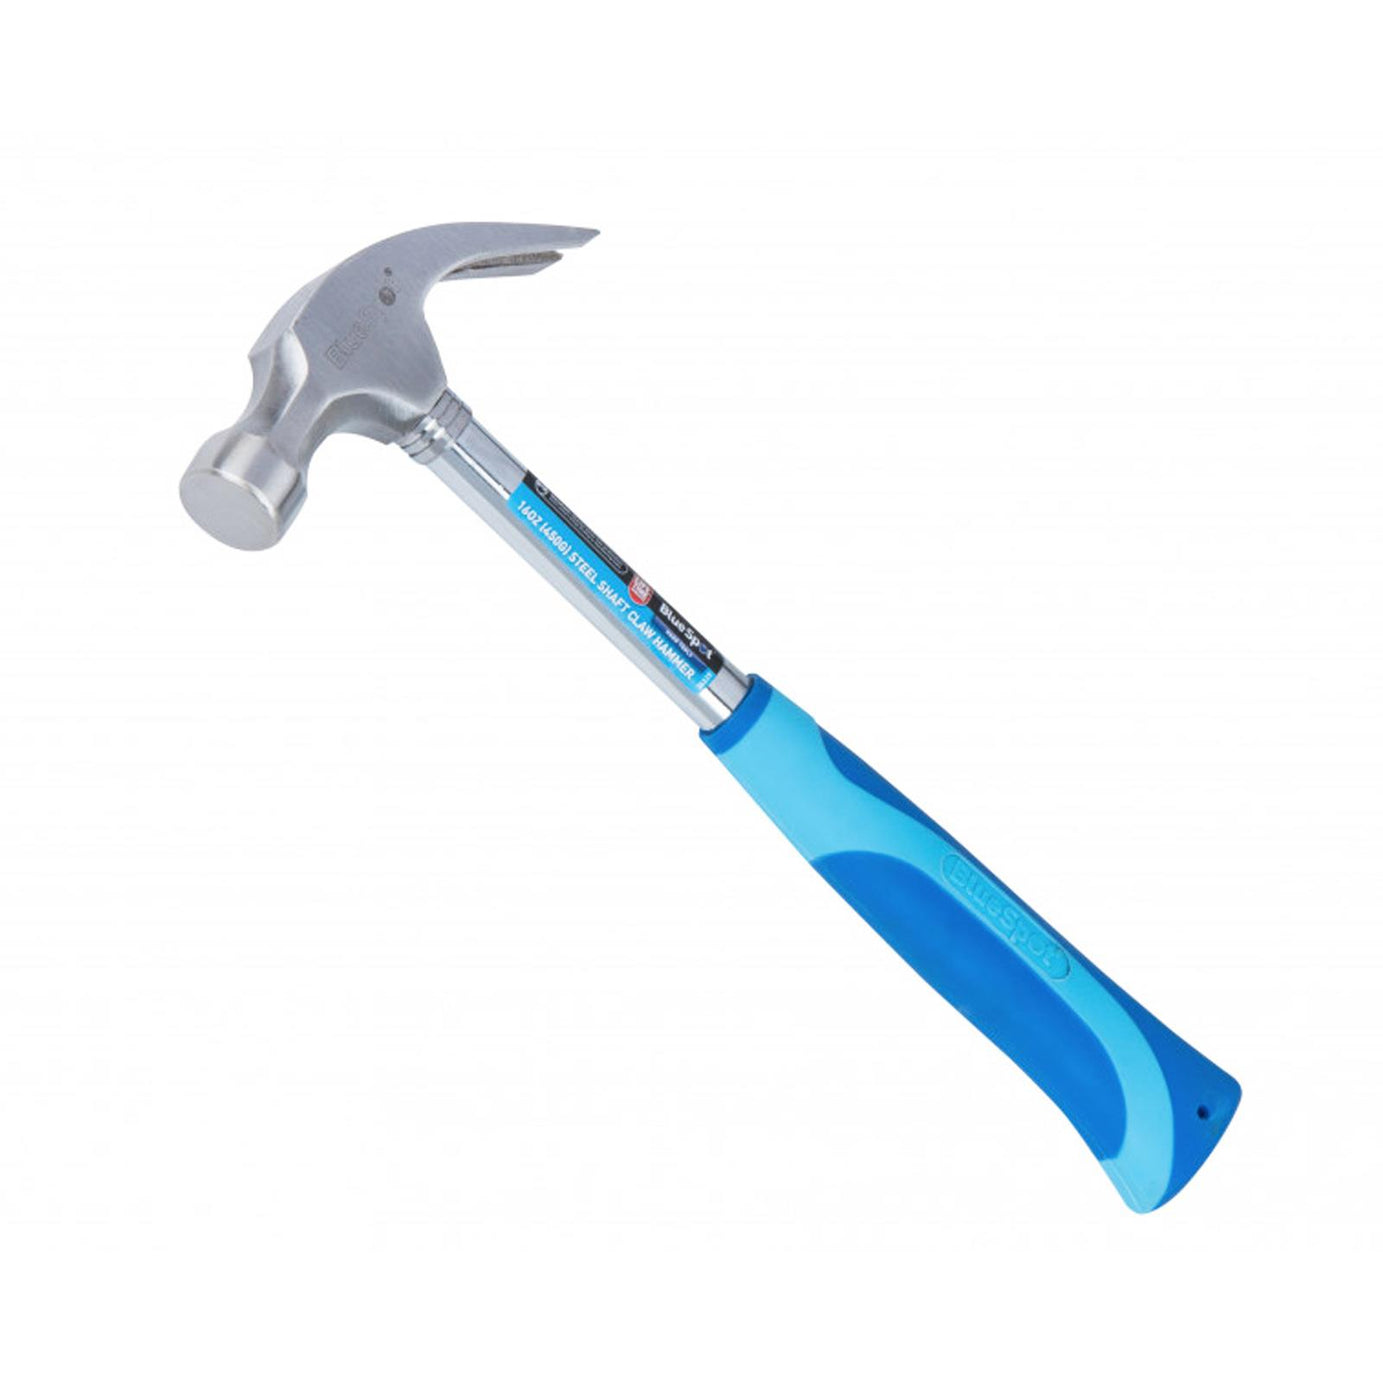 BlueSpot Claw Hammer Fibreglass 16oz Hardened Steel Curved Head Rubber Grip Nail Puller